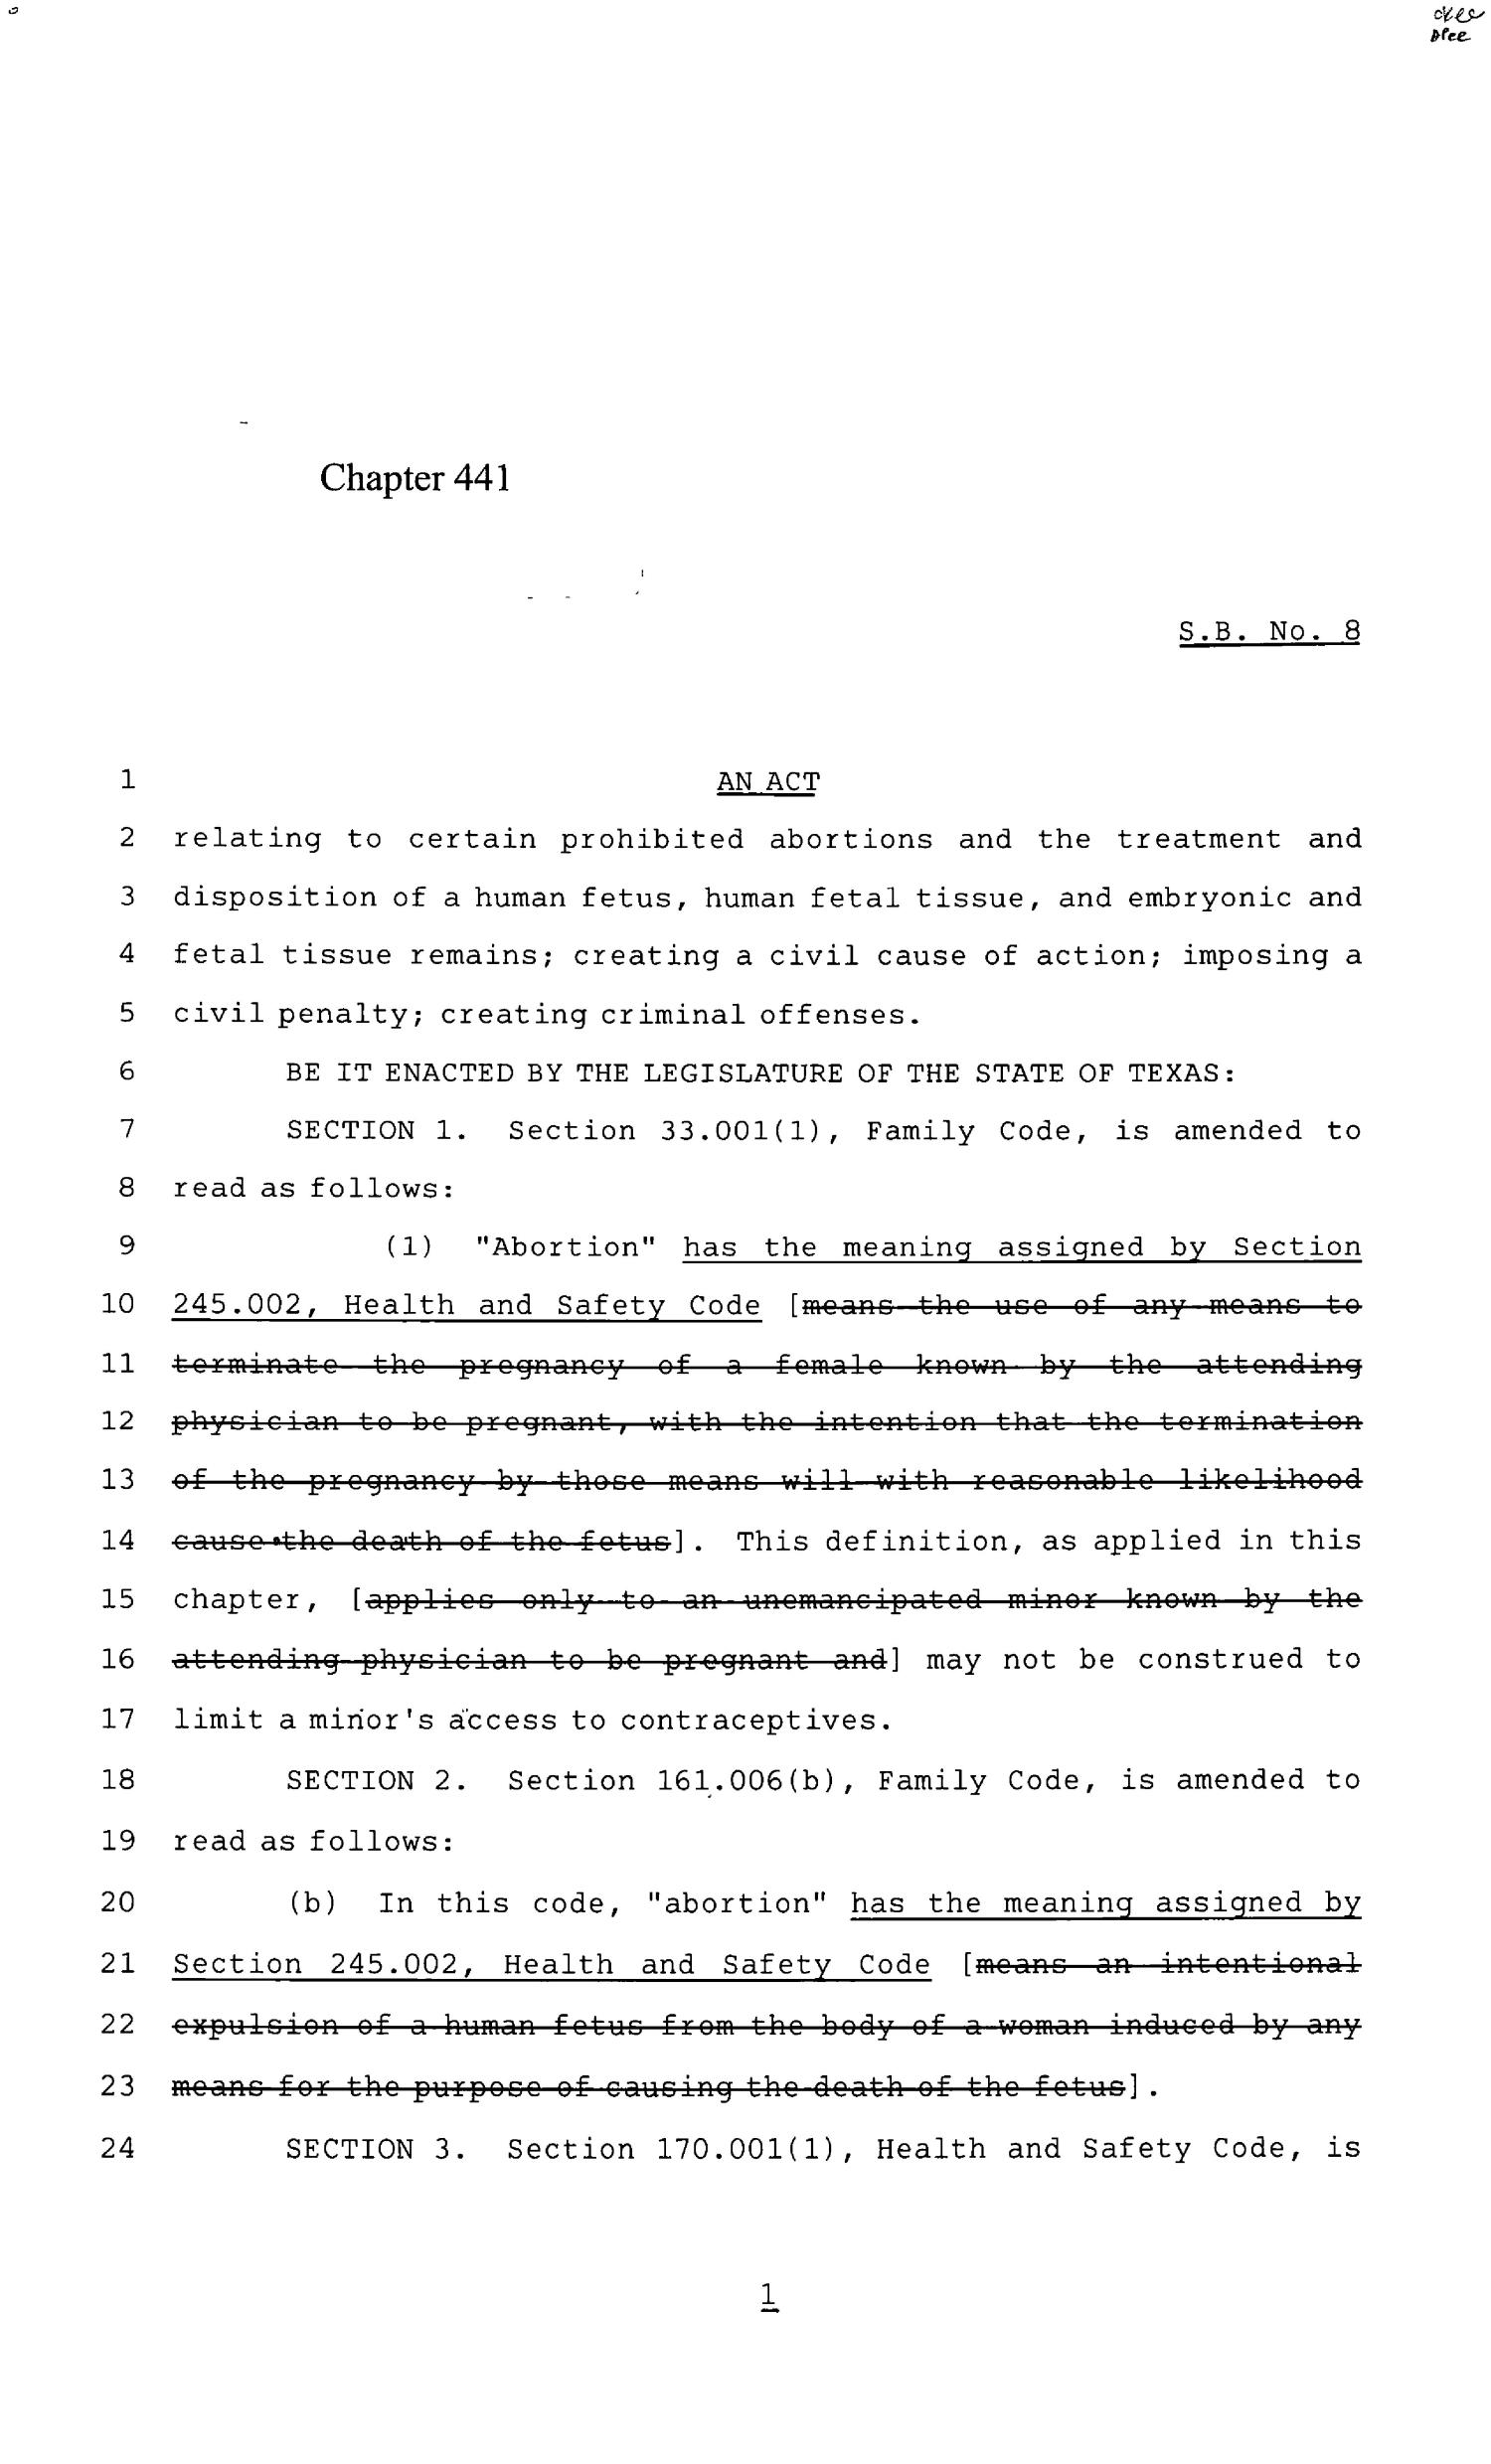 85th Texas Legislature, Regular Session, Senate Bill 8, Chapter 441
                                                
                                                    [Sequence #]: 1 of 39
                                                